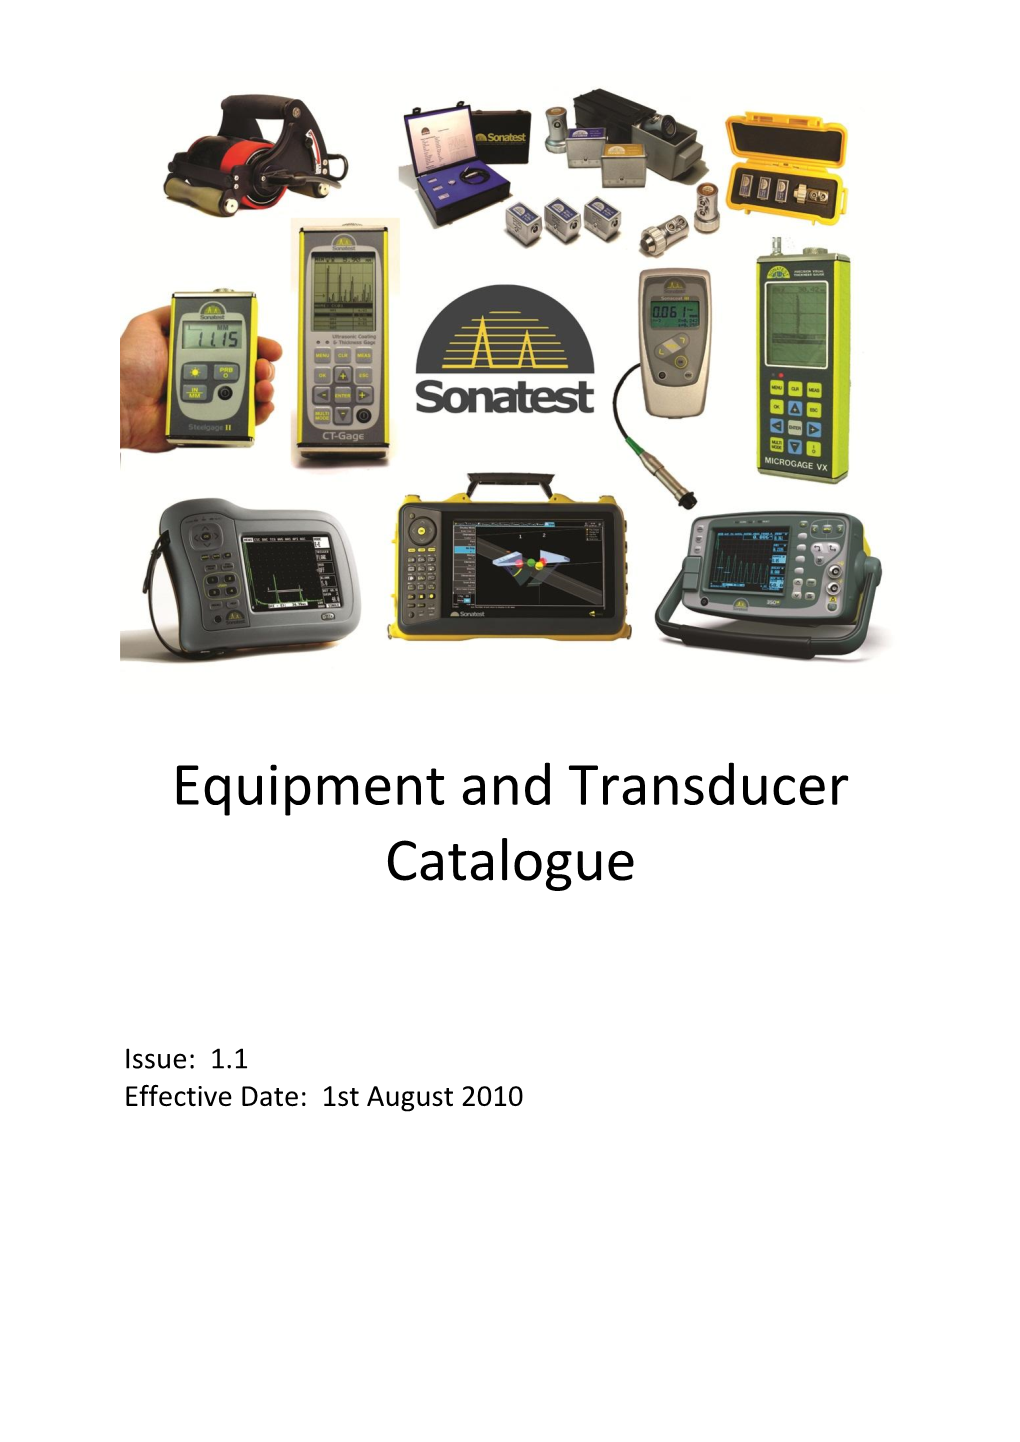 Equipment and Transducer Catalogue